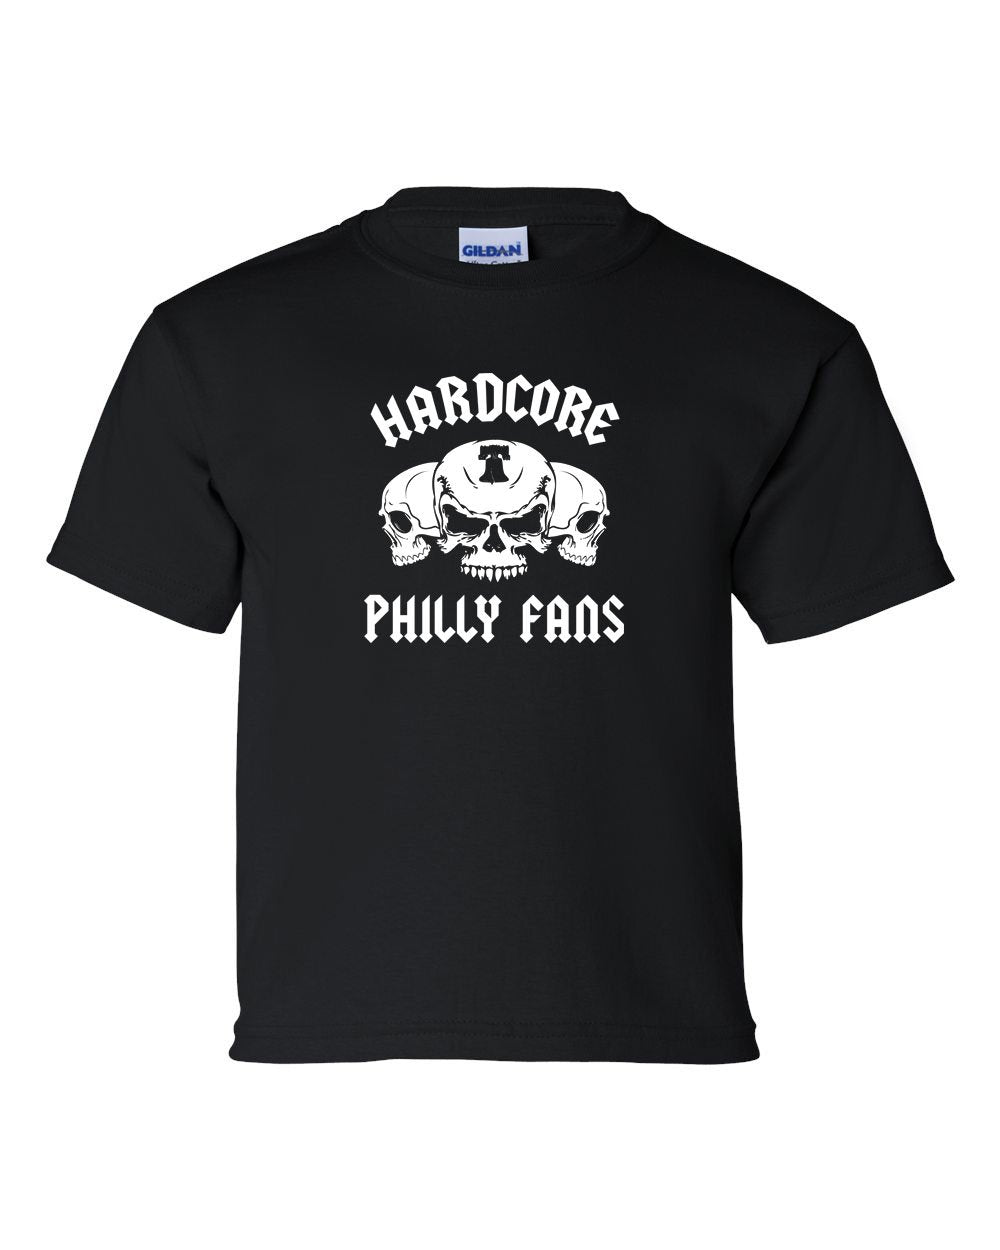 Hardcore Philly Fans KIDS T-Shirt